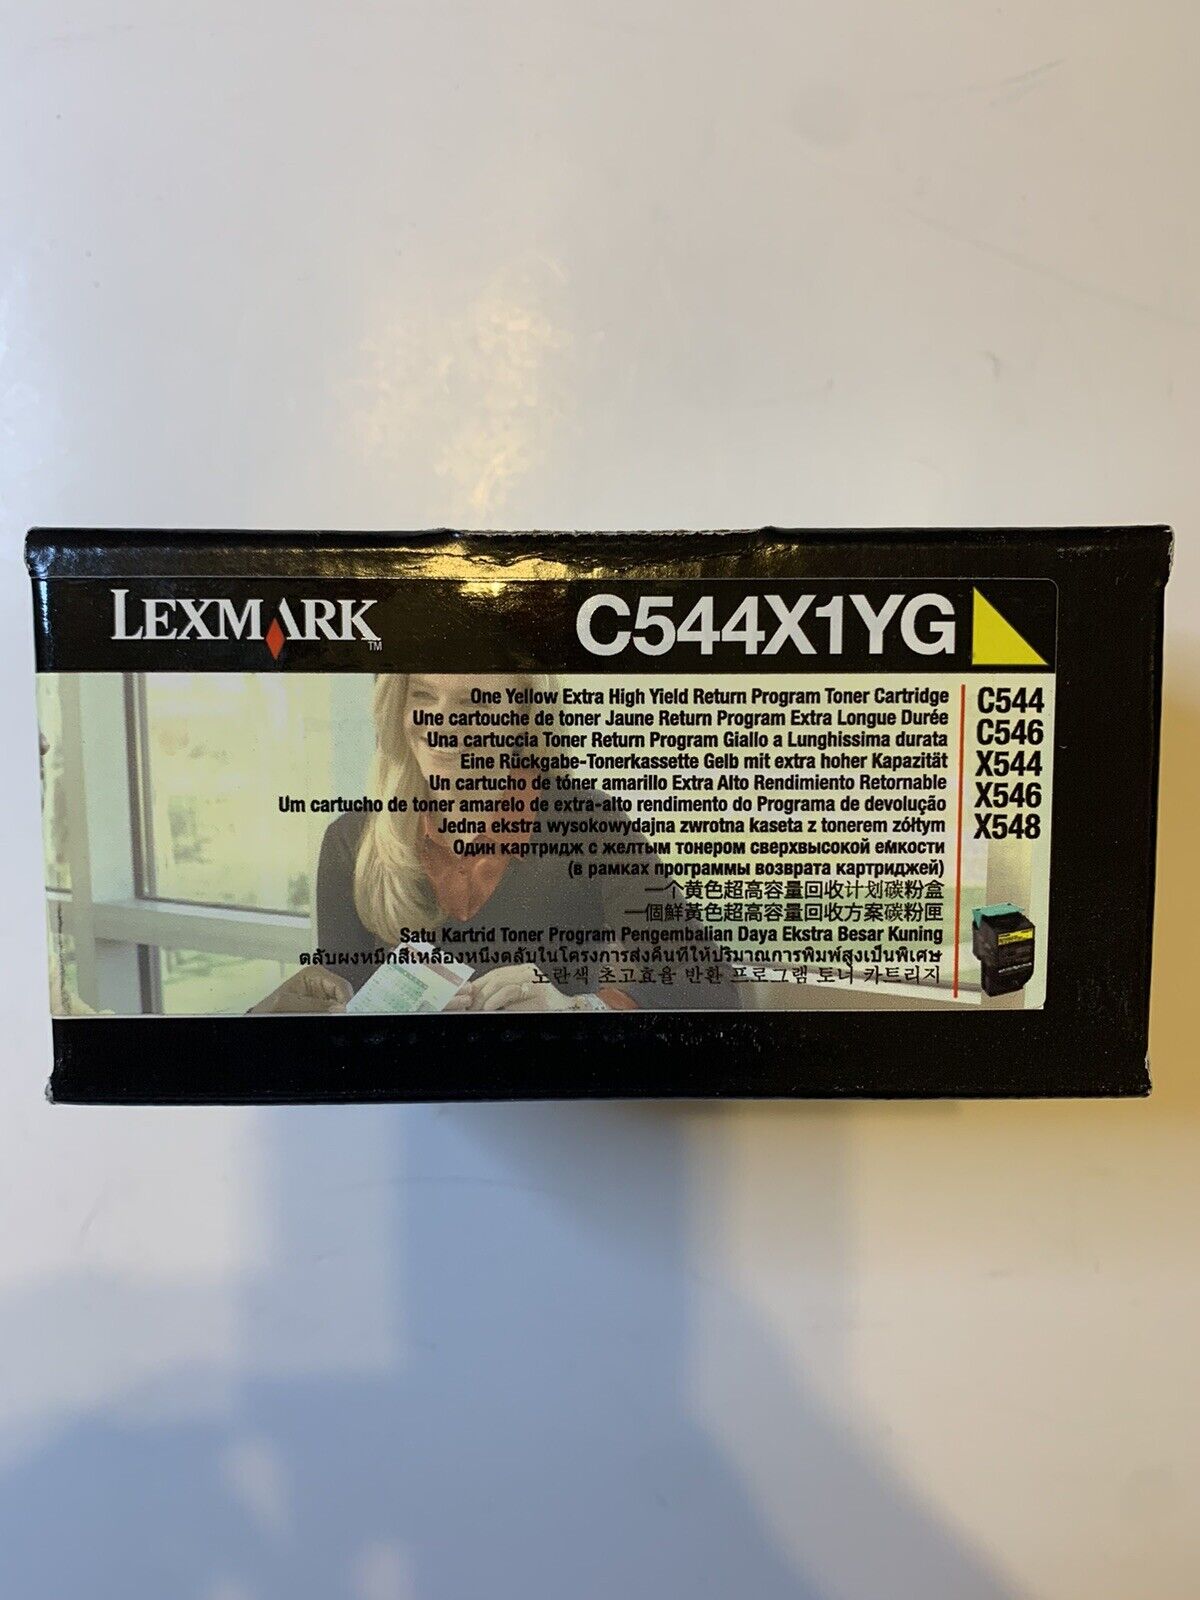 LEXMARK-C544X1YG ONE YELLOW EXTRA HIGH YIELD RETURN TONER CARTRIDGE Sealed New